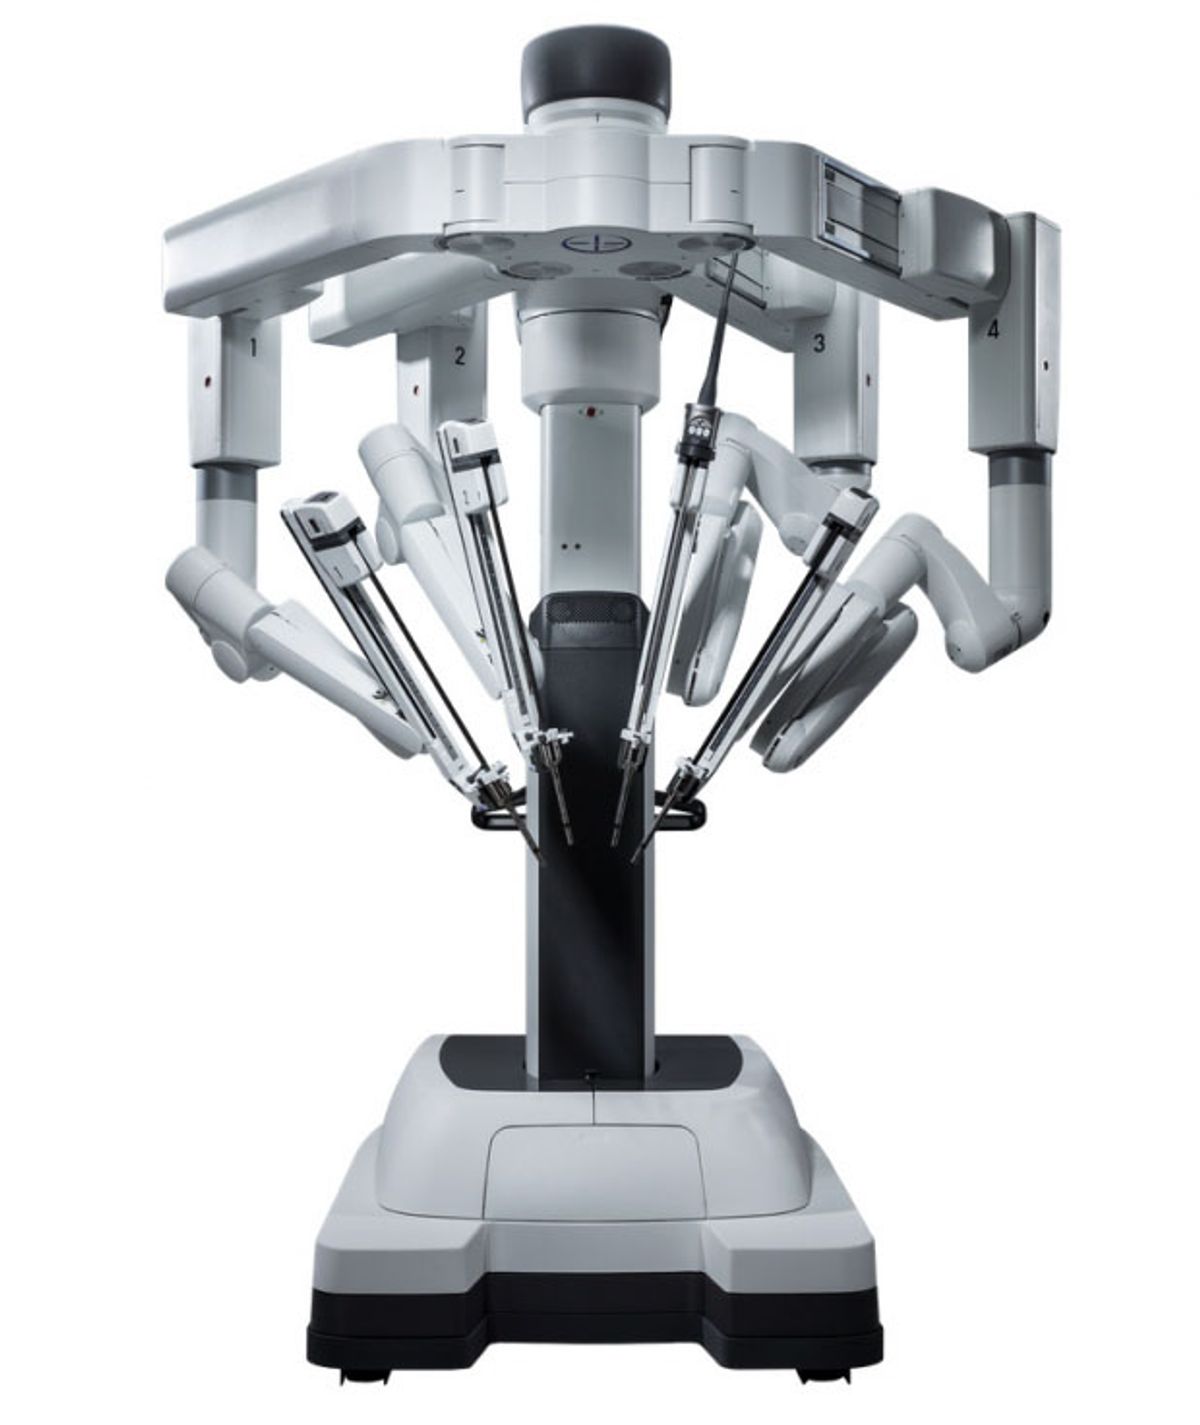 New Da Vinci Xi Surgical Robot Is Optimized for Complex Procedures